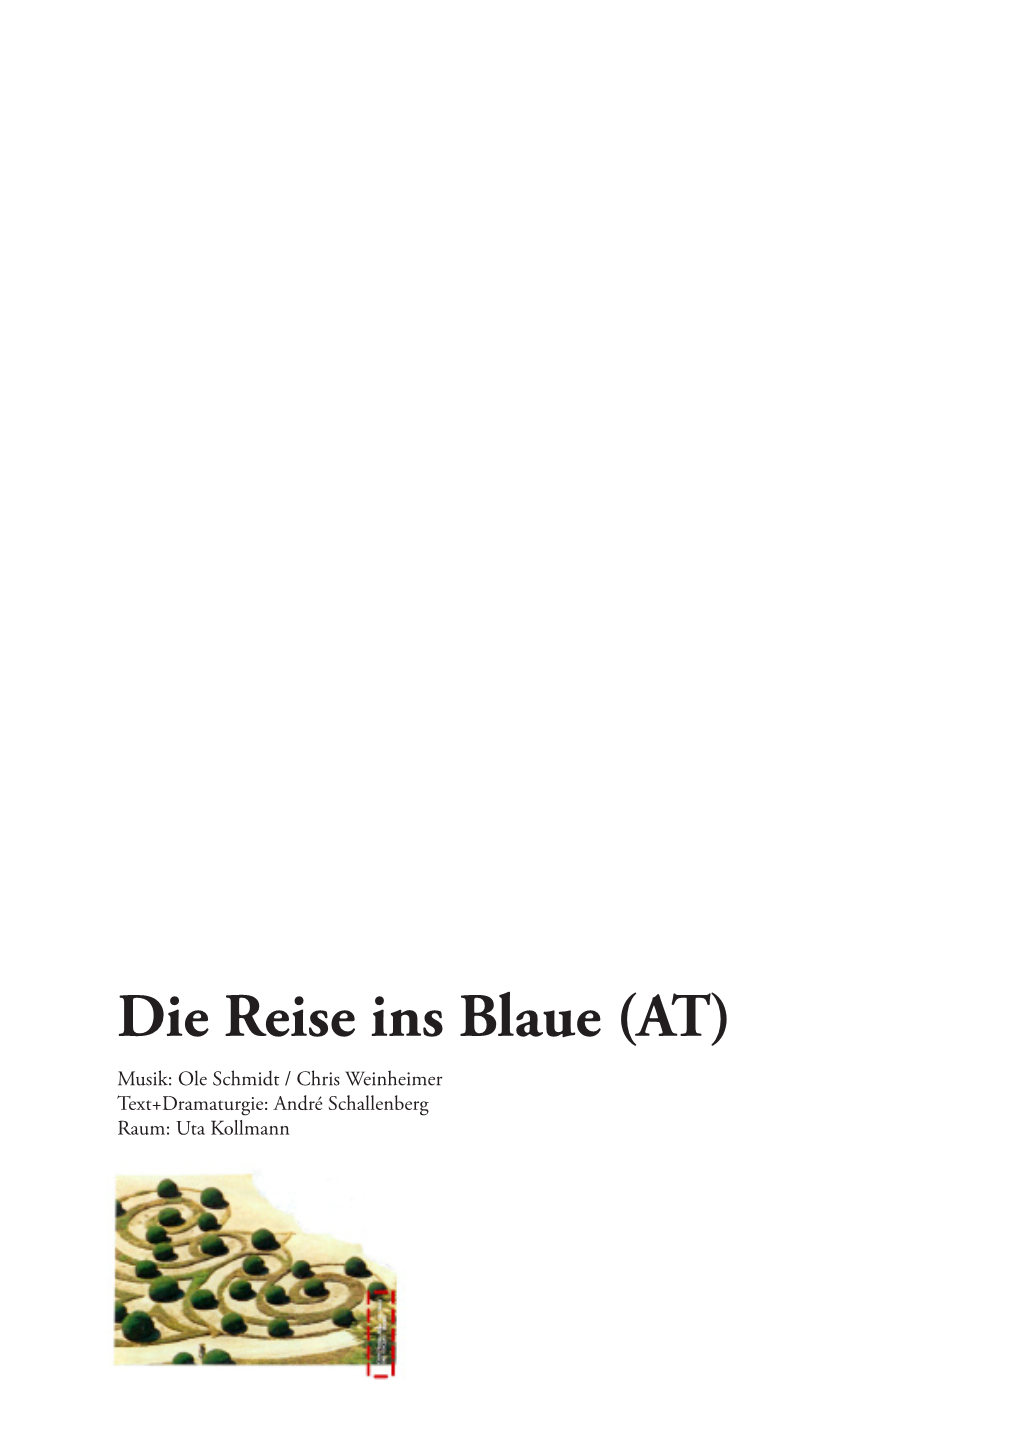 Die Reise Ins Blaue (AT) Musik: Ole Schmidt / Chris Weinheimer Text+Dramaturgie: André Schallenberg Raum: Uta Kollmann „